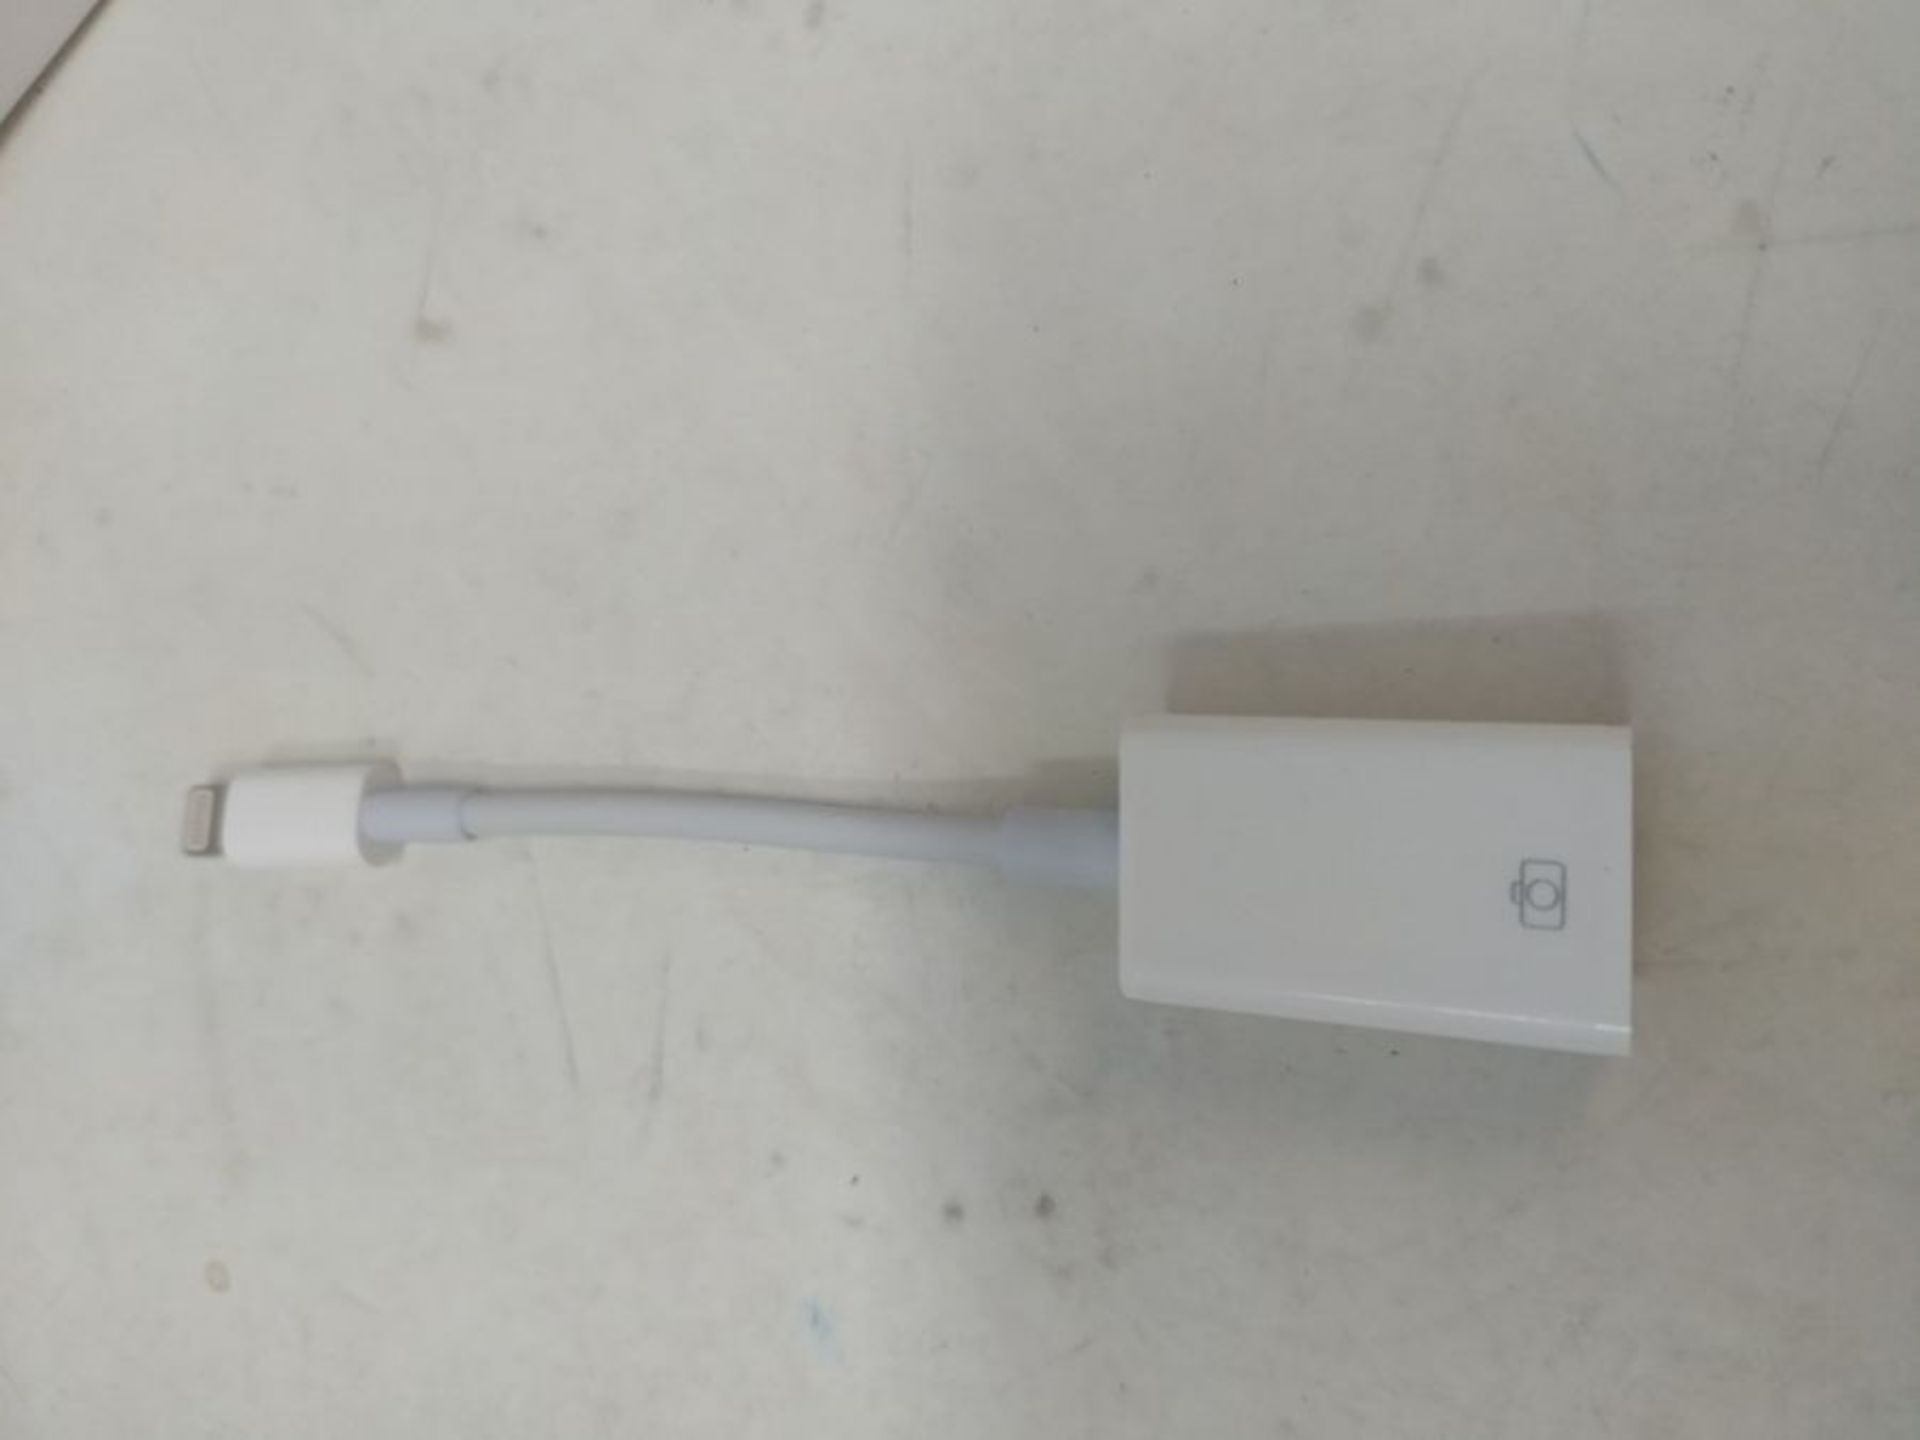 USB Camera Adapter, Upgrade USB 2.0 OTG Cable adapter Lightning to USB Female Adapter - Image 2 of 2